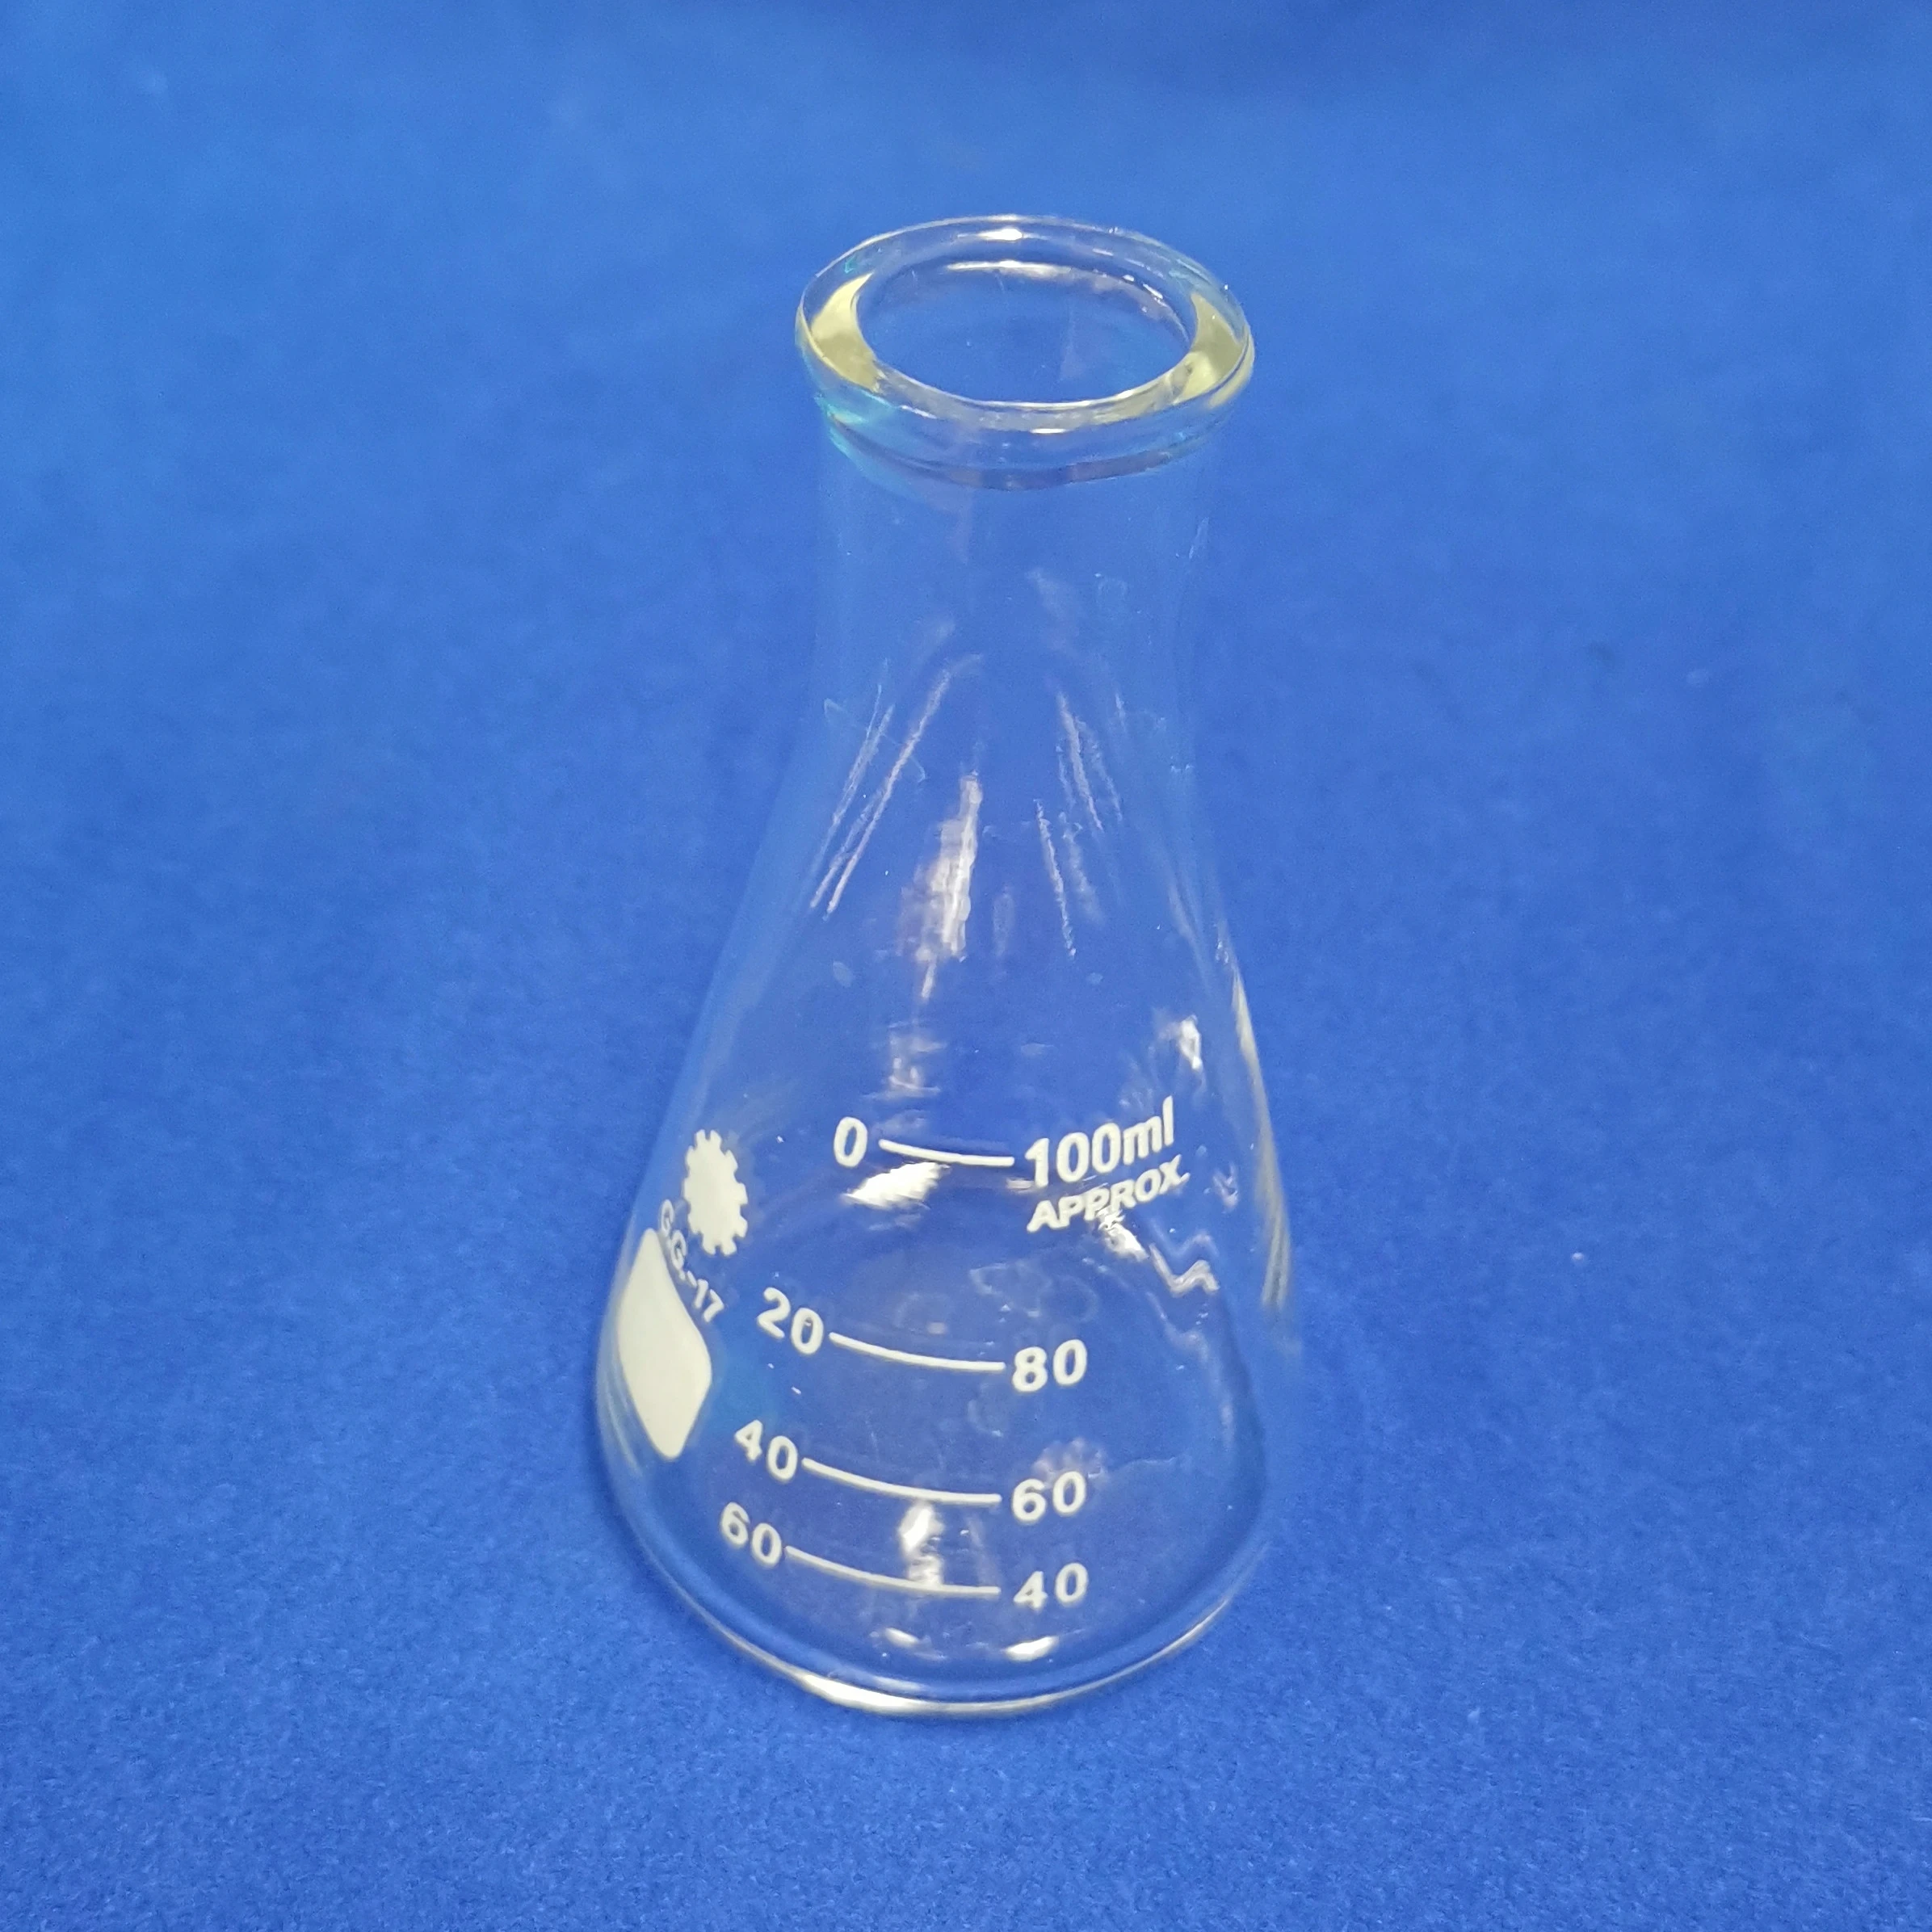 1103  lab equipment heat resistant glass conical beaker